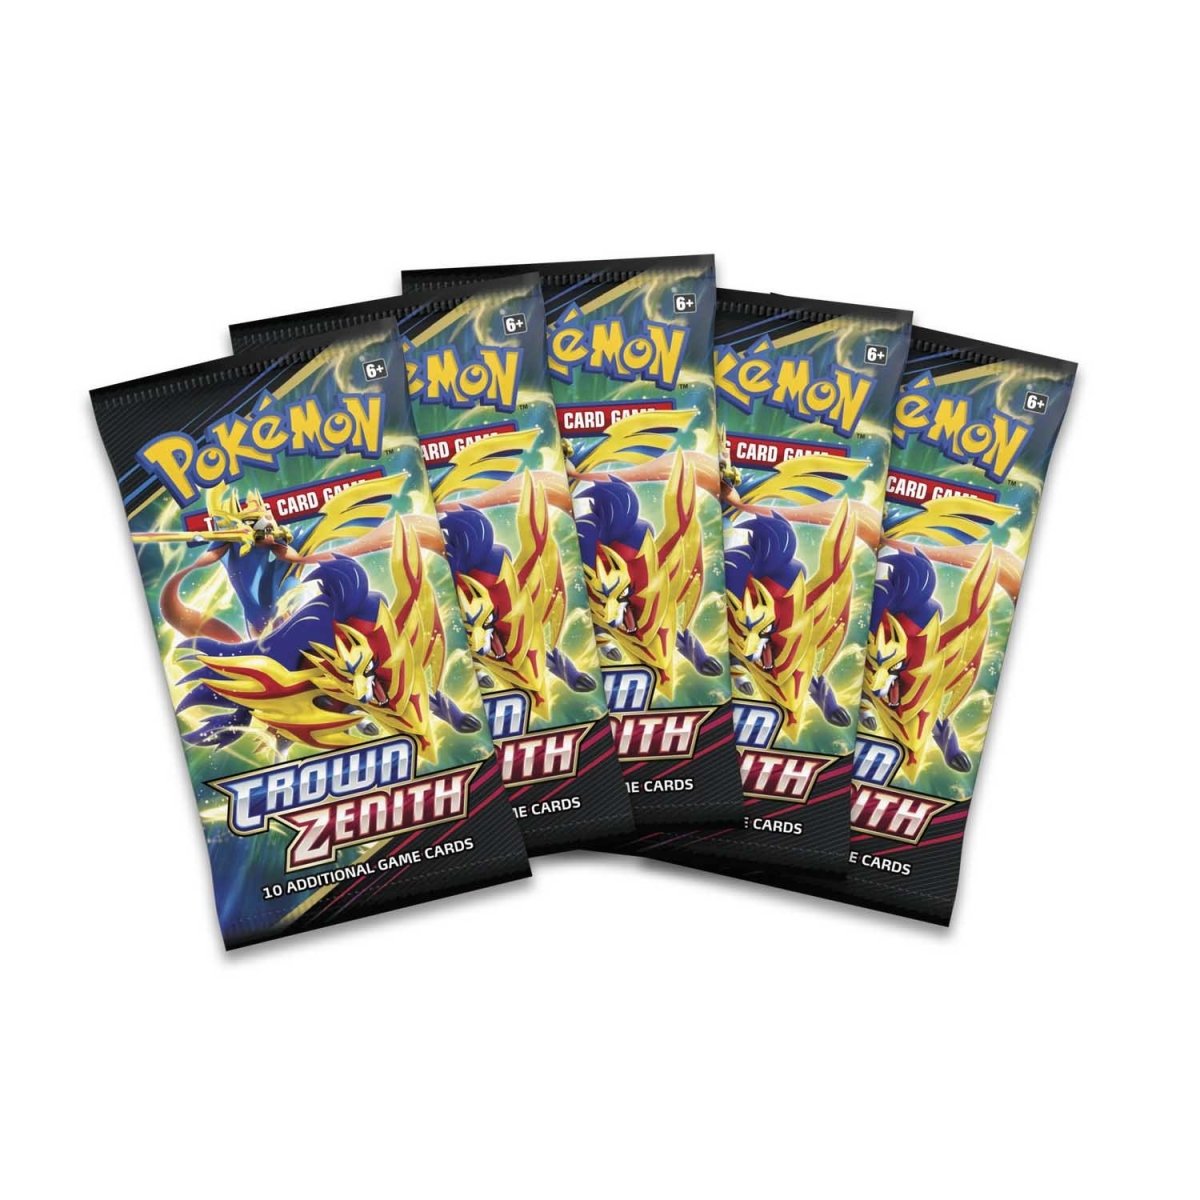 Pokemon TCG - Crown Zenith Pikachu VMAX Special Collection